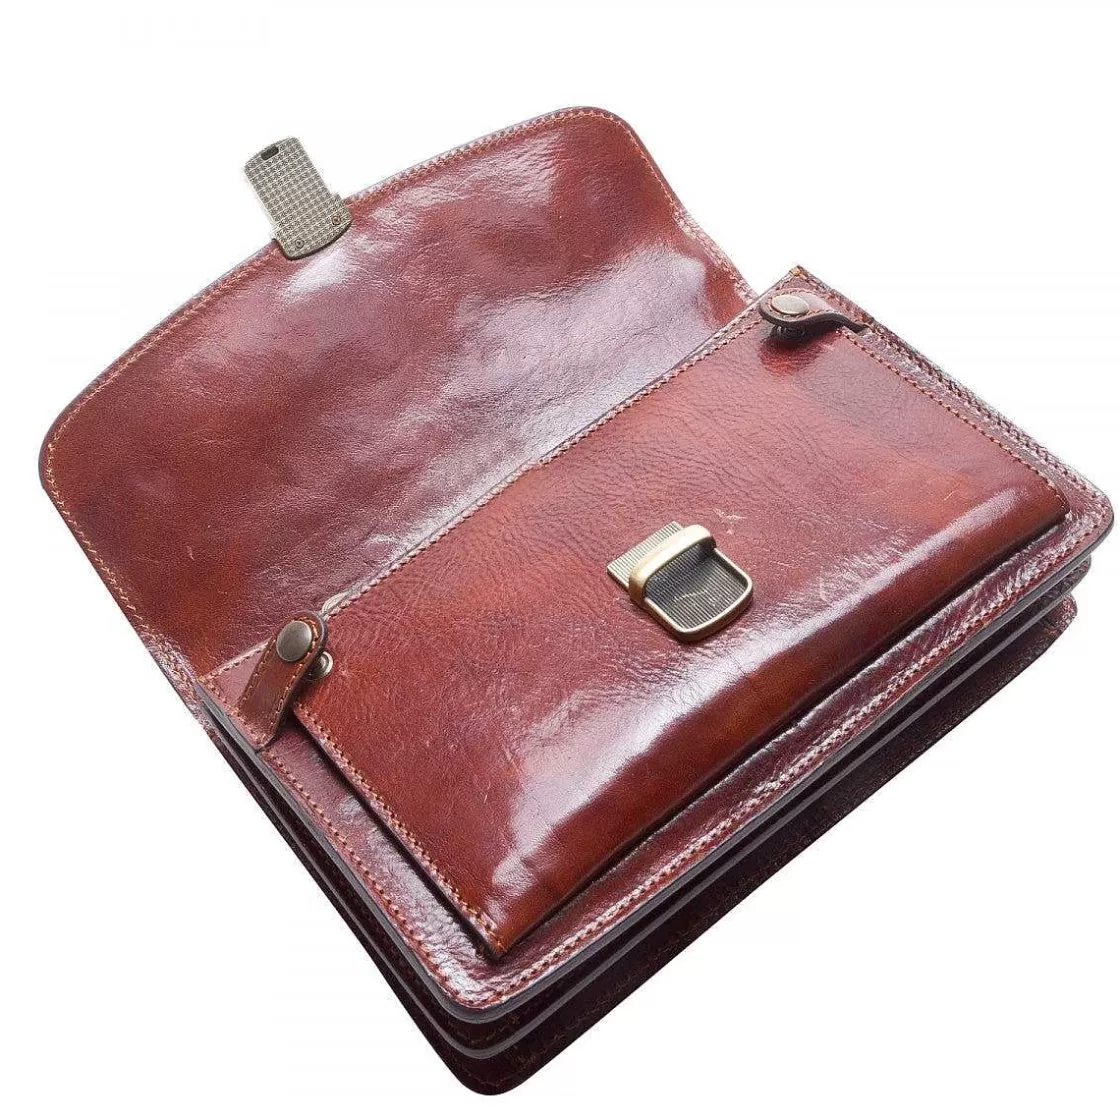 Leonardo Handbag In Leather Full Grain With Tuc Closure And Two Compartments Sale